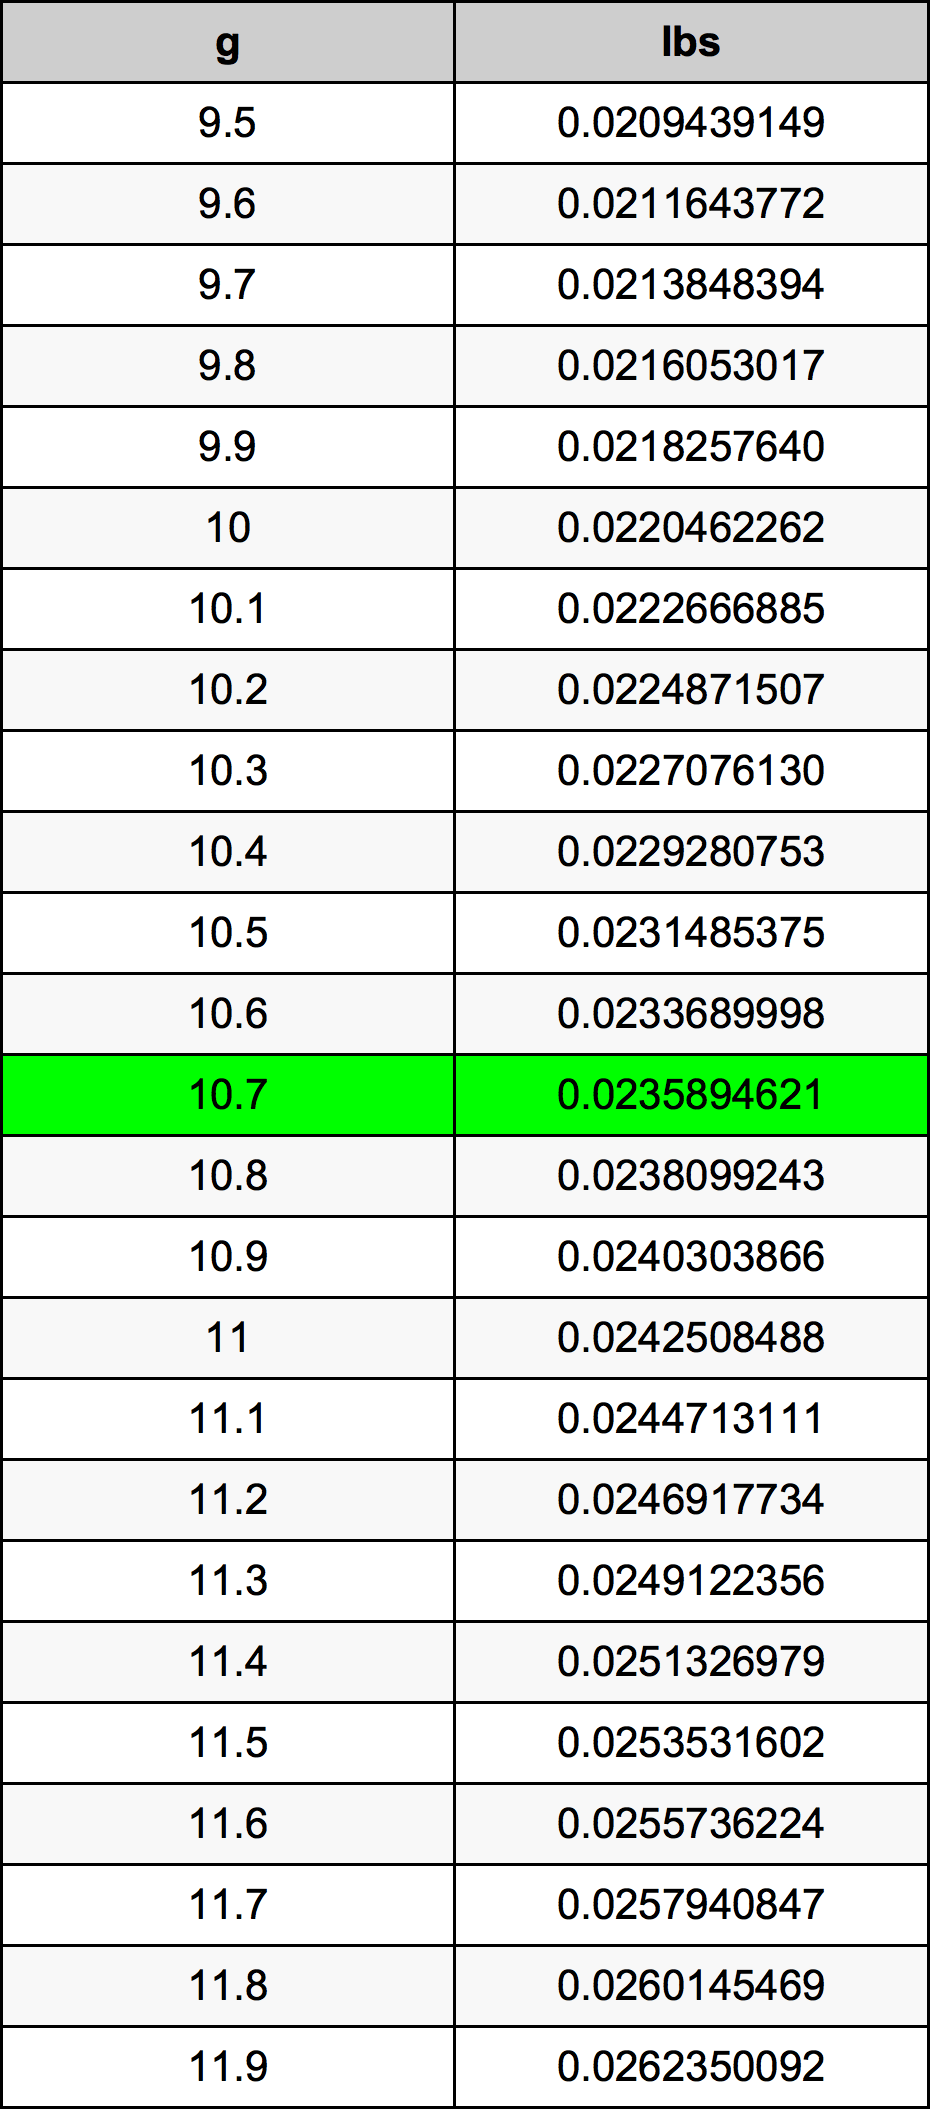 10.7 غرام جدول تحويل